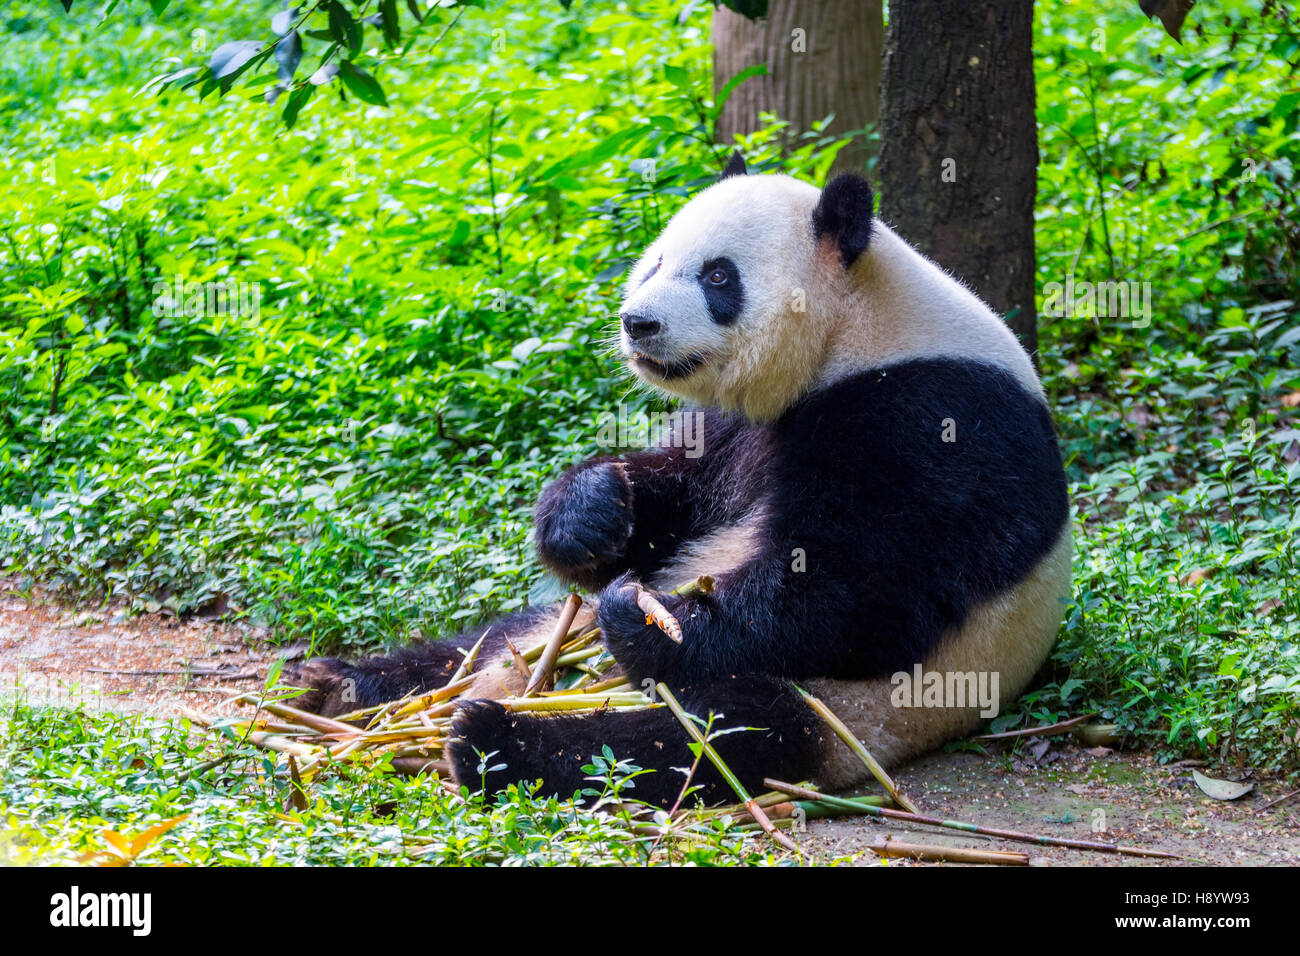 Giant panda bear (Ailuropoda melanoleuca) sitting and eating fresh bamboo Stock Photo